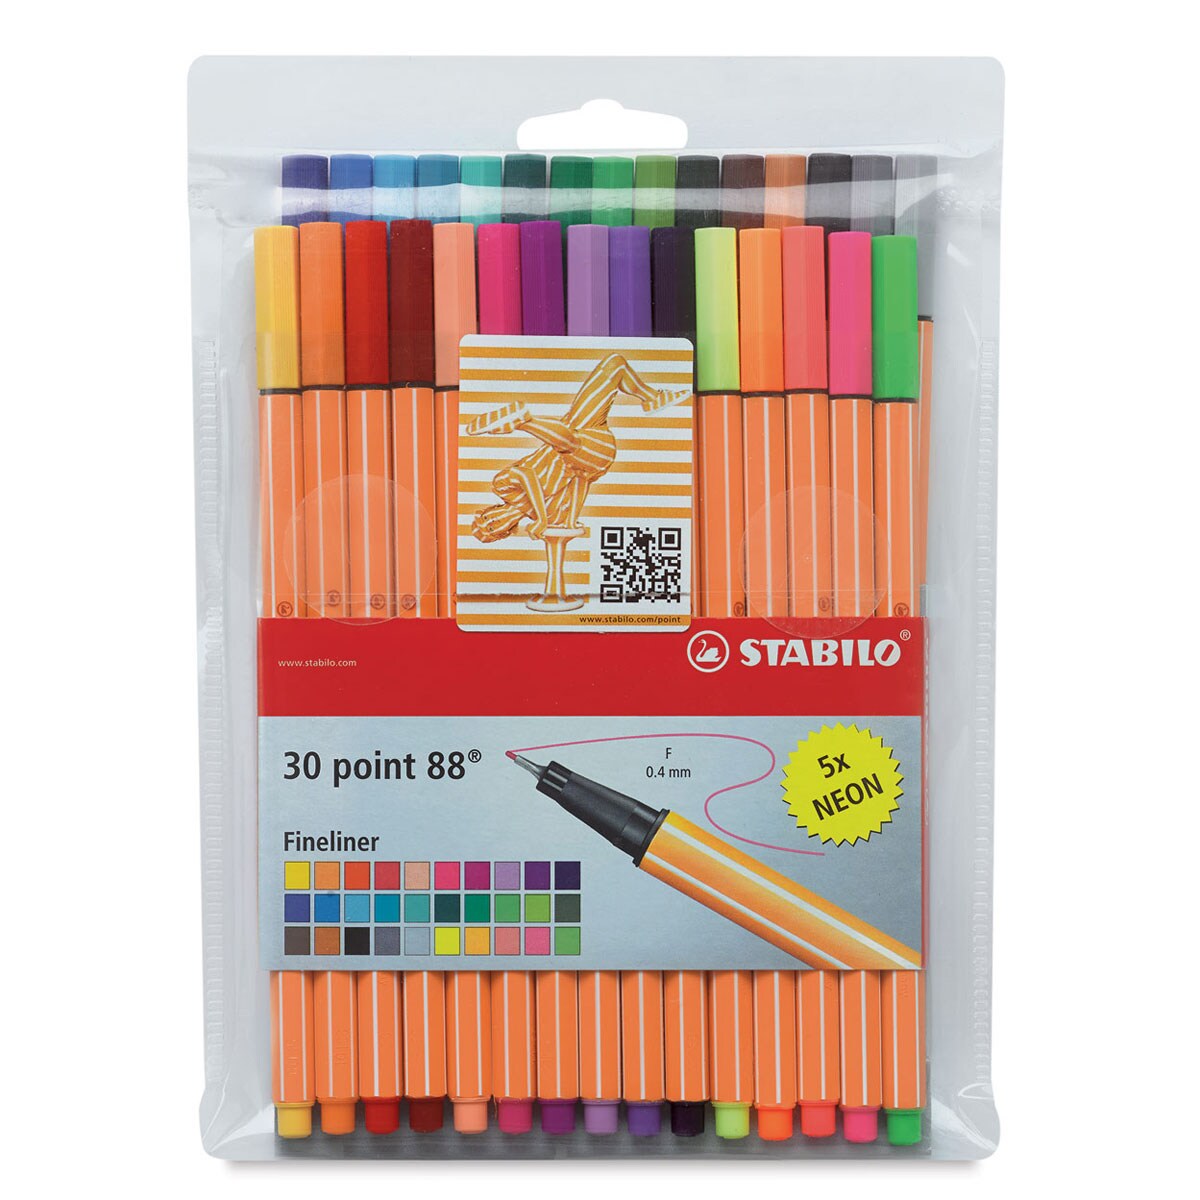 Point 88 Fineliner Pen Set - Assorted Colors, Set of 30